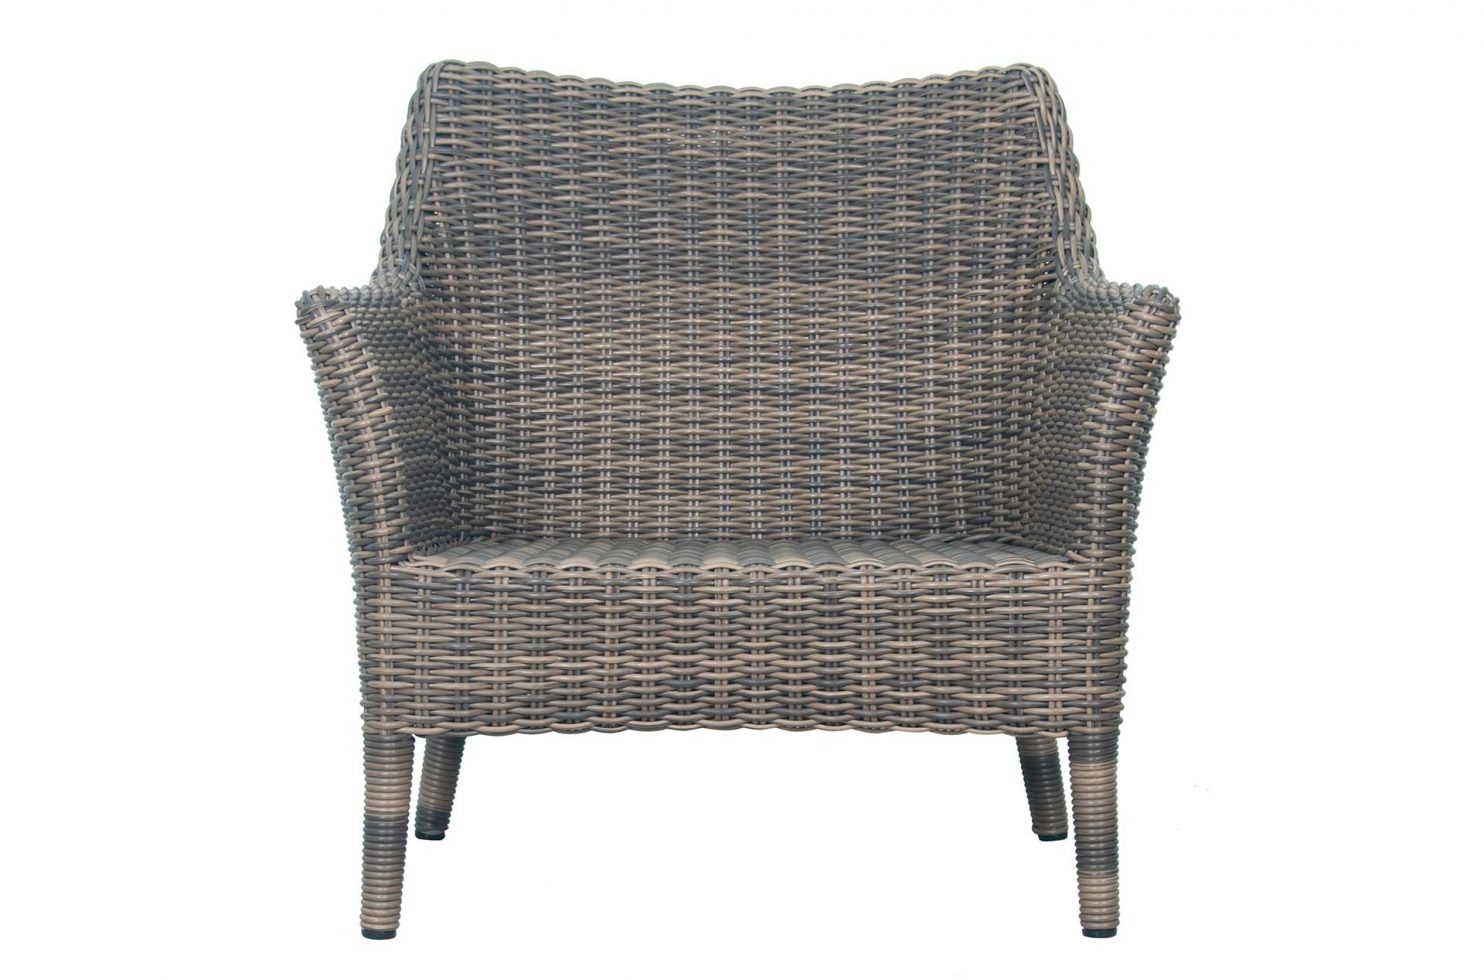 prov wicker leeward lounge chair S6207901407 no cushion front